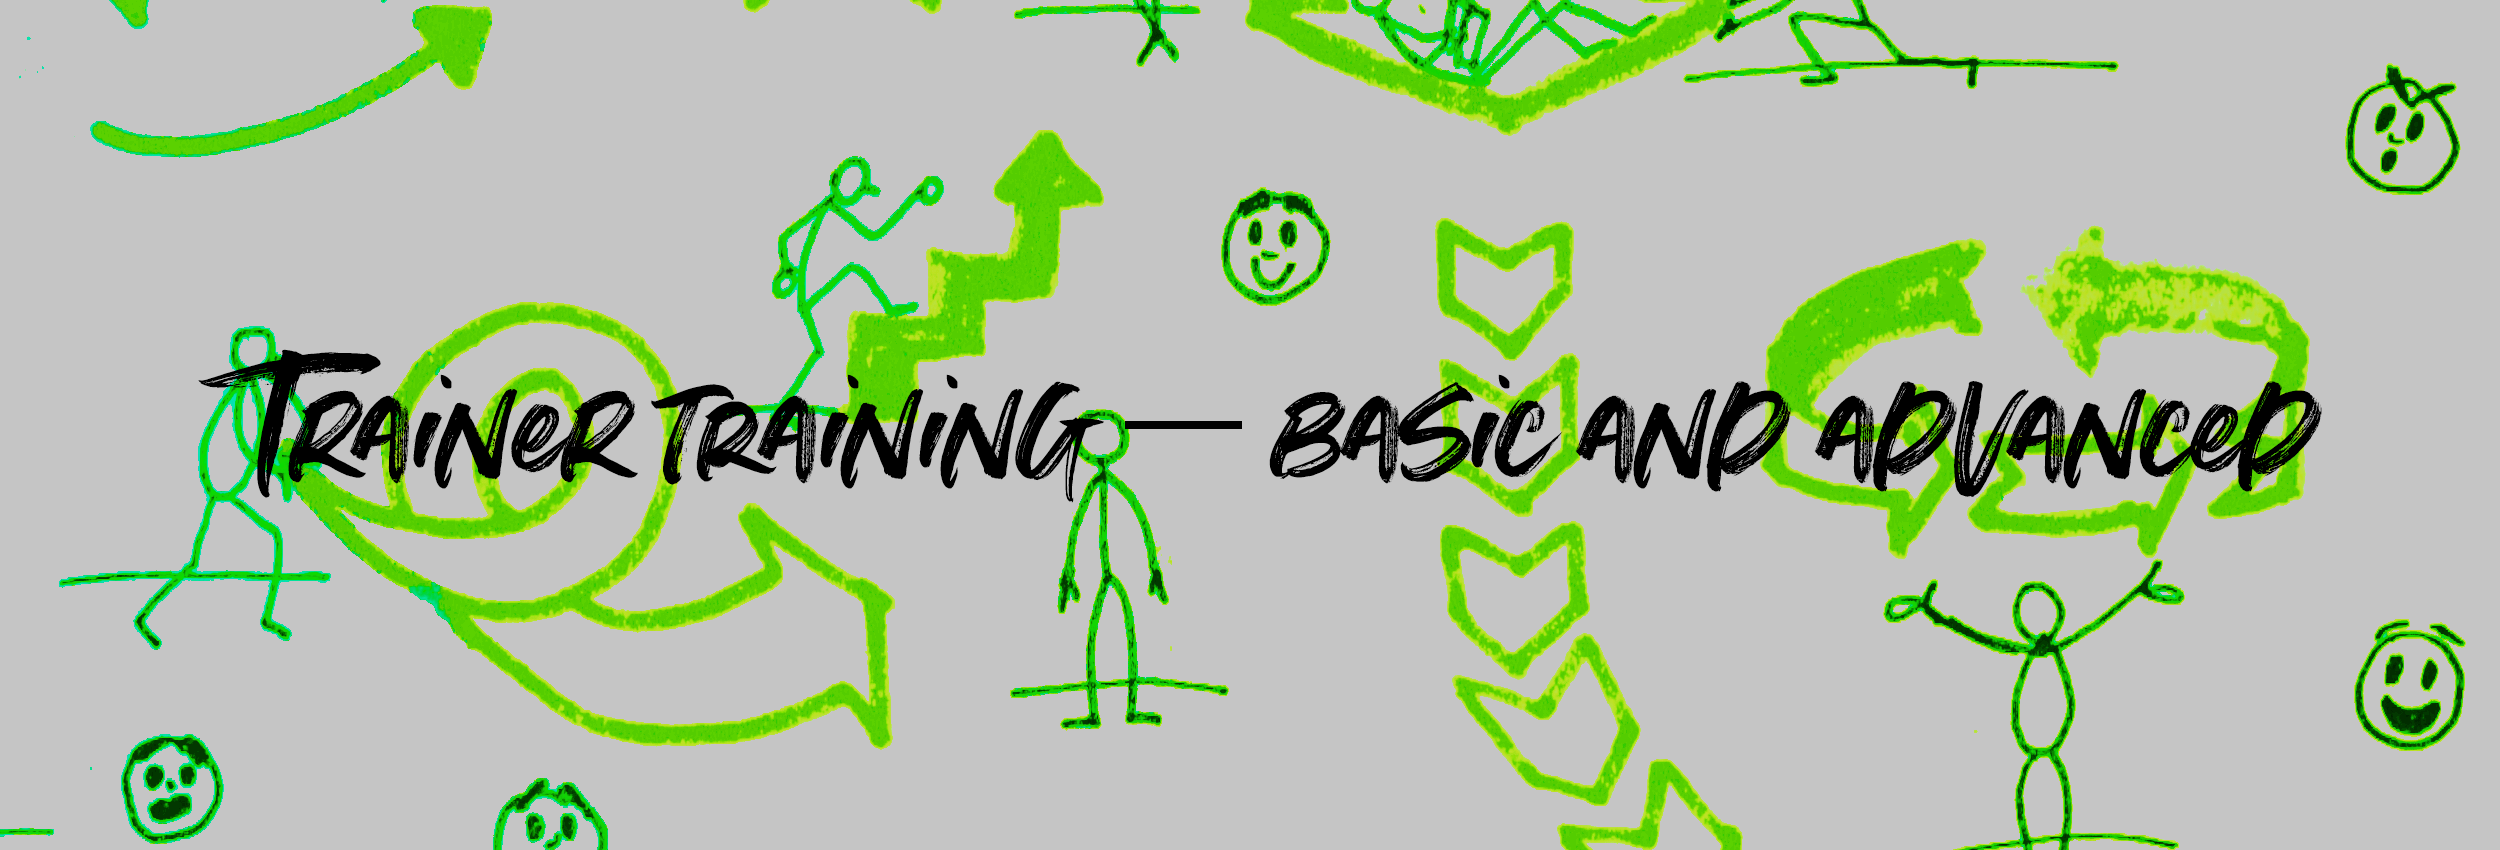 Trainer training – basic and advanced